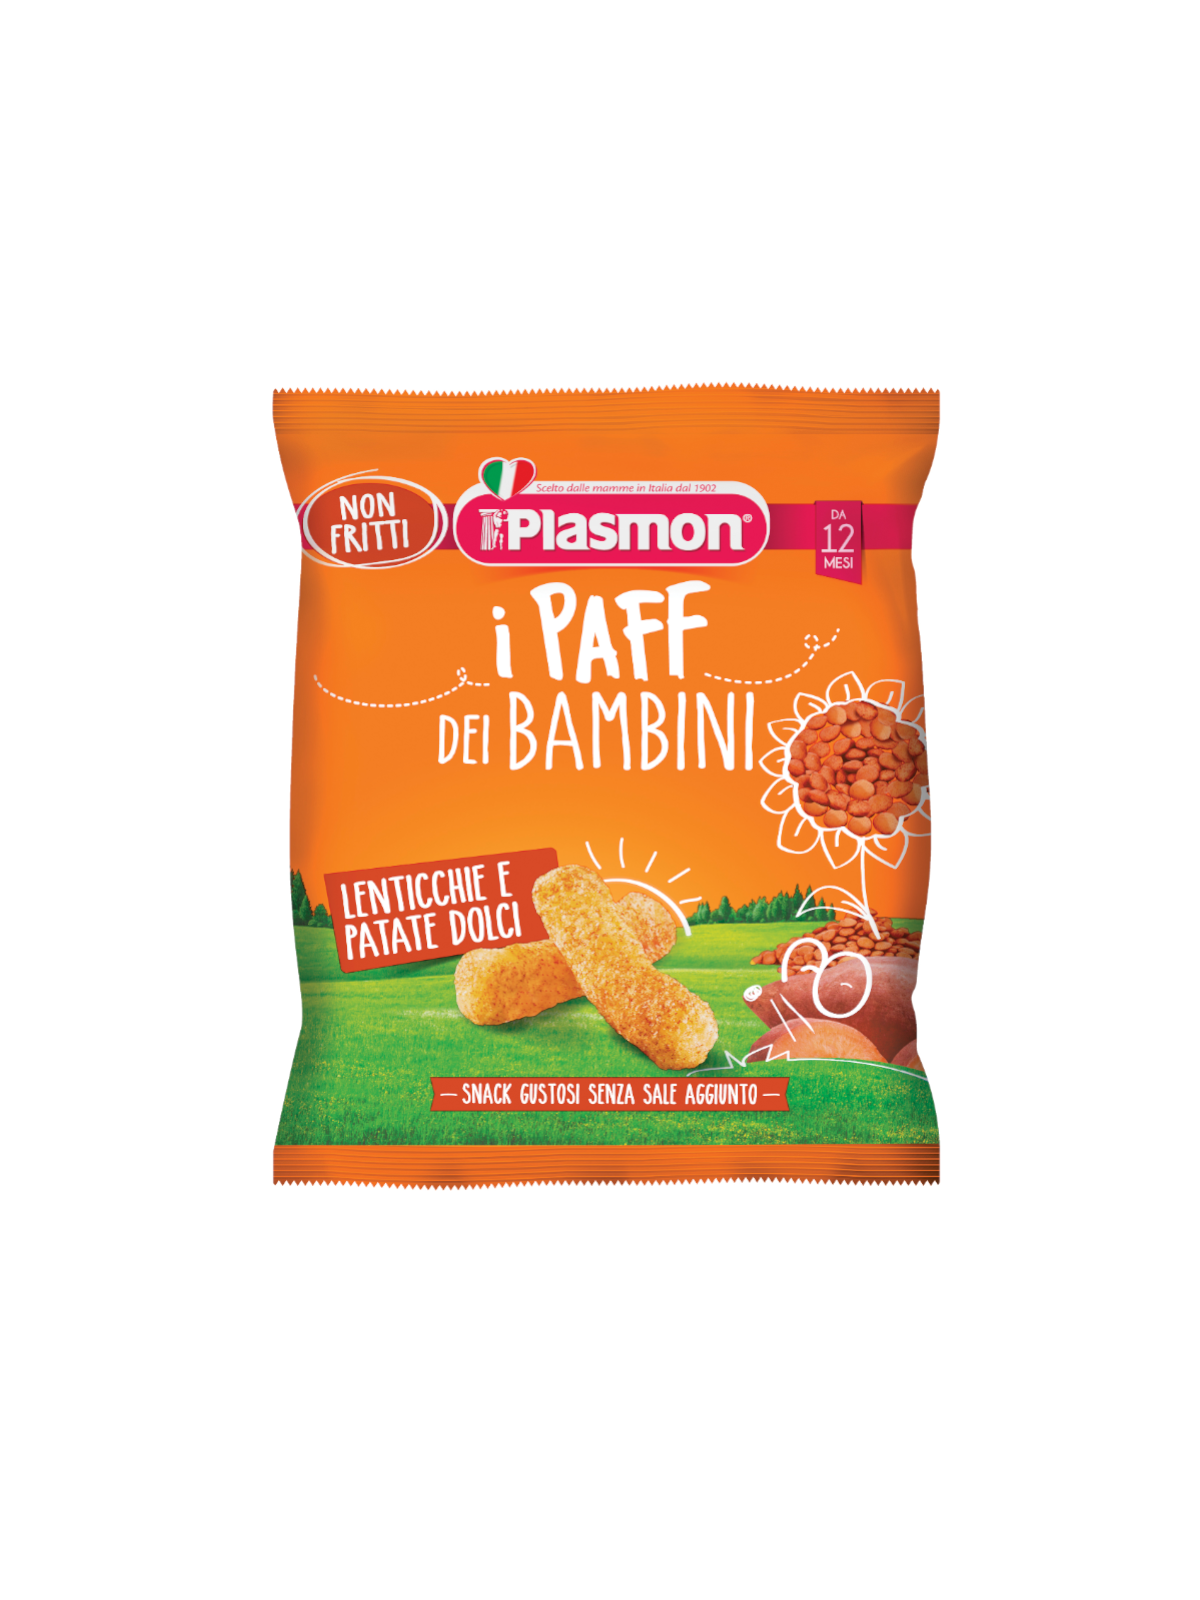 Plasmon - Paff lenticchie e patate dolci 15 gr - Bimbostore